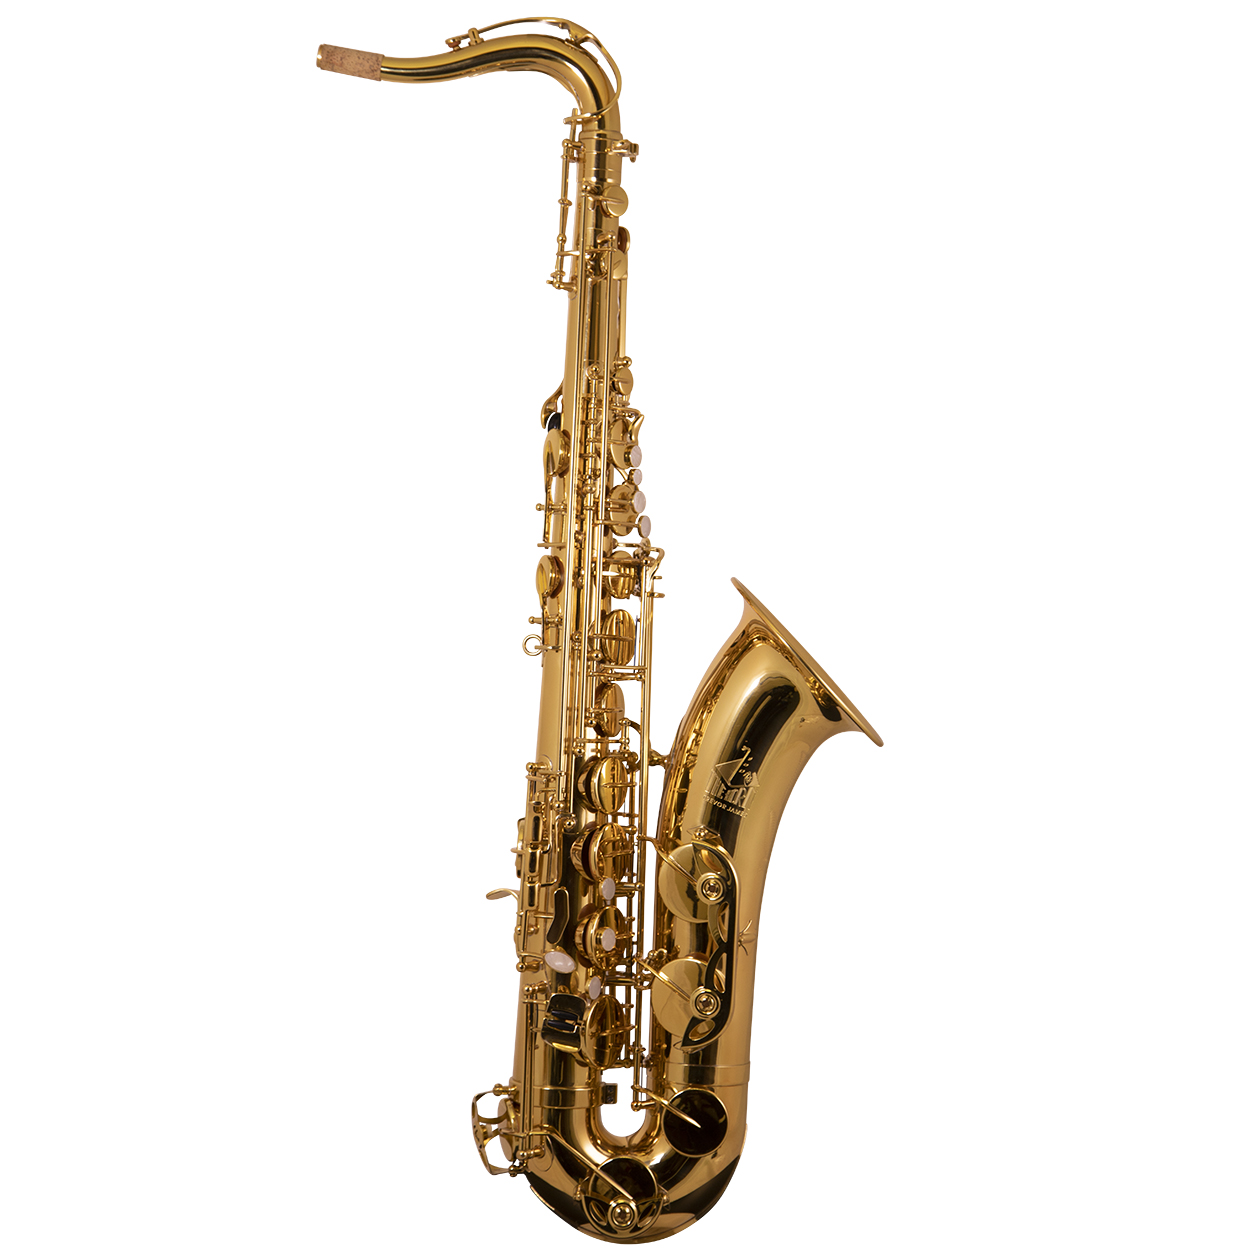 Trevor James 'The Horn' Tenor Saxophone 